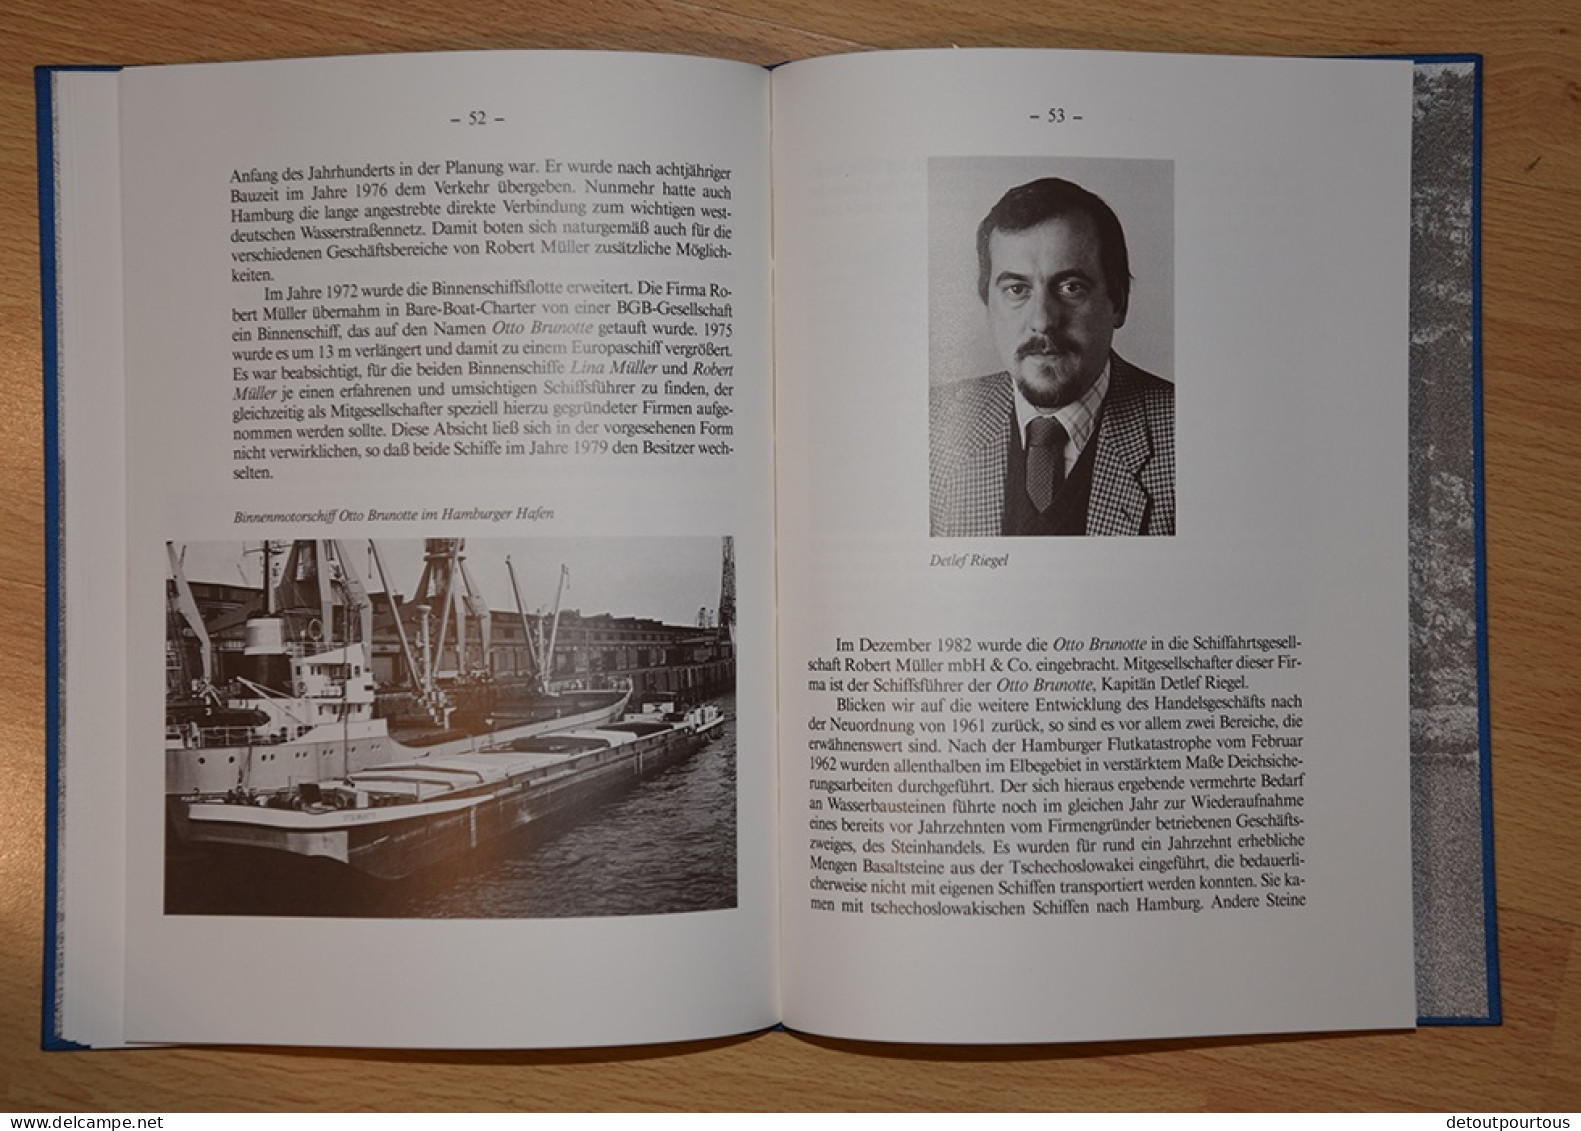 75 JAHRE ROBERT MULLER HAMBURG 1911 1986 Schiffahrt Schiff Gechichte boat company history